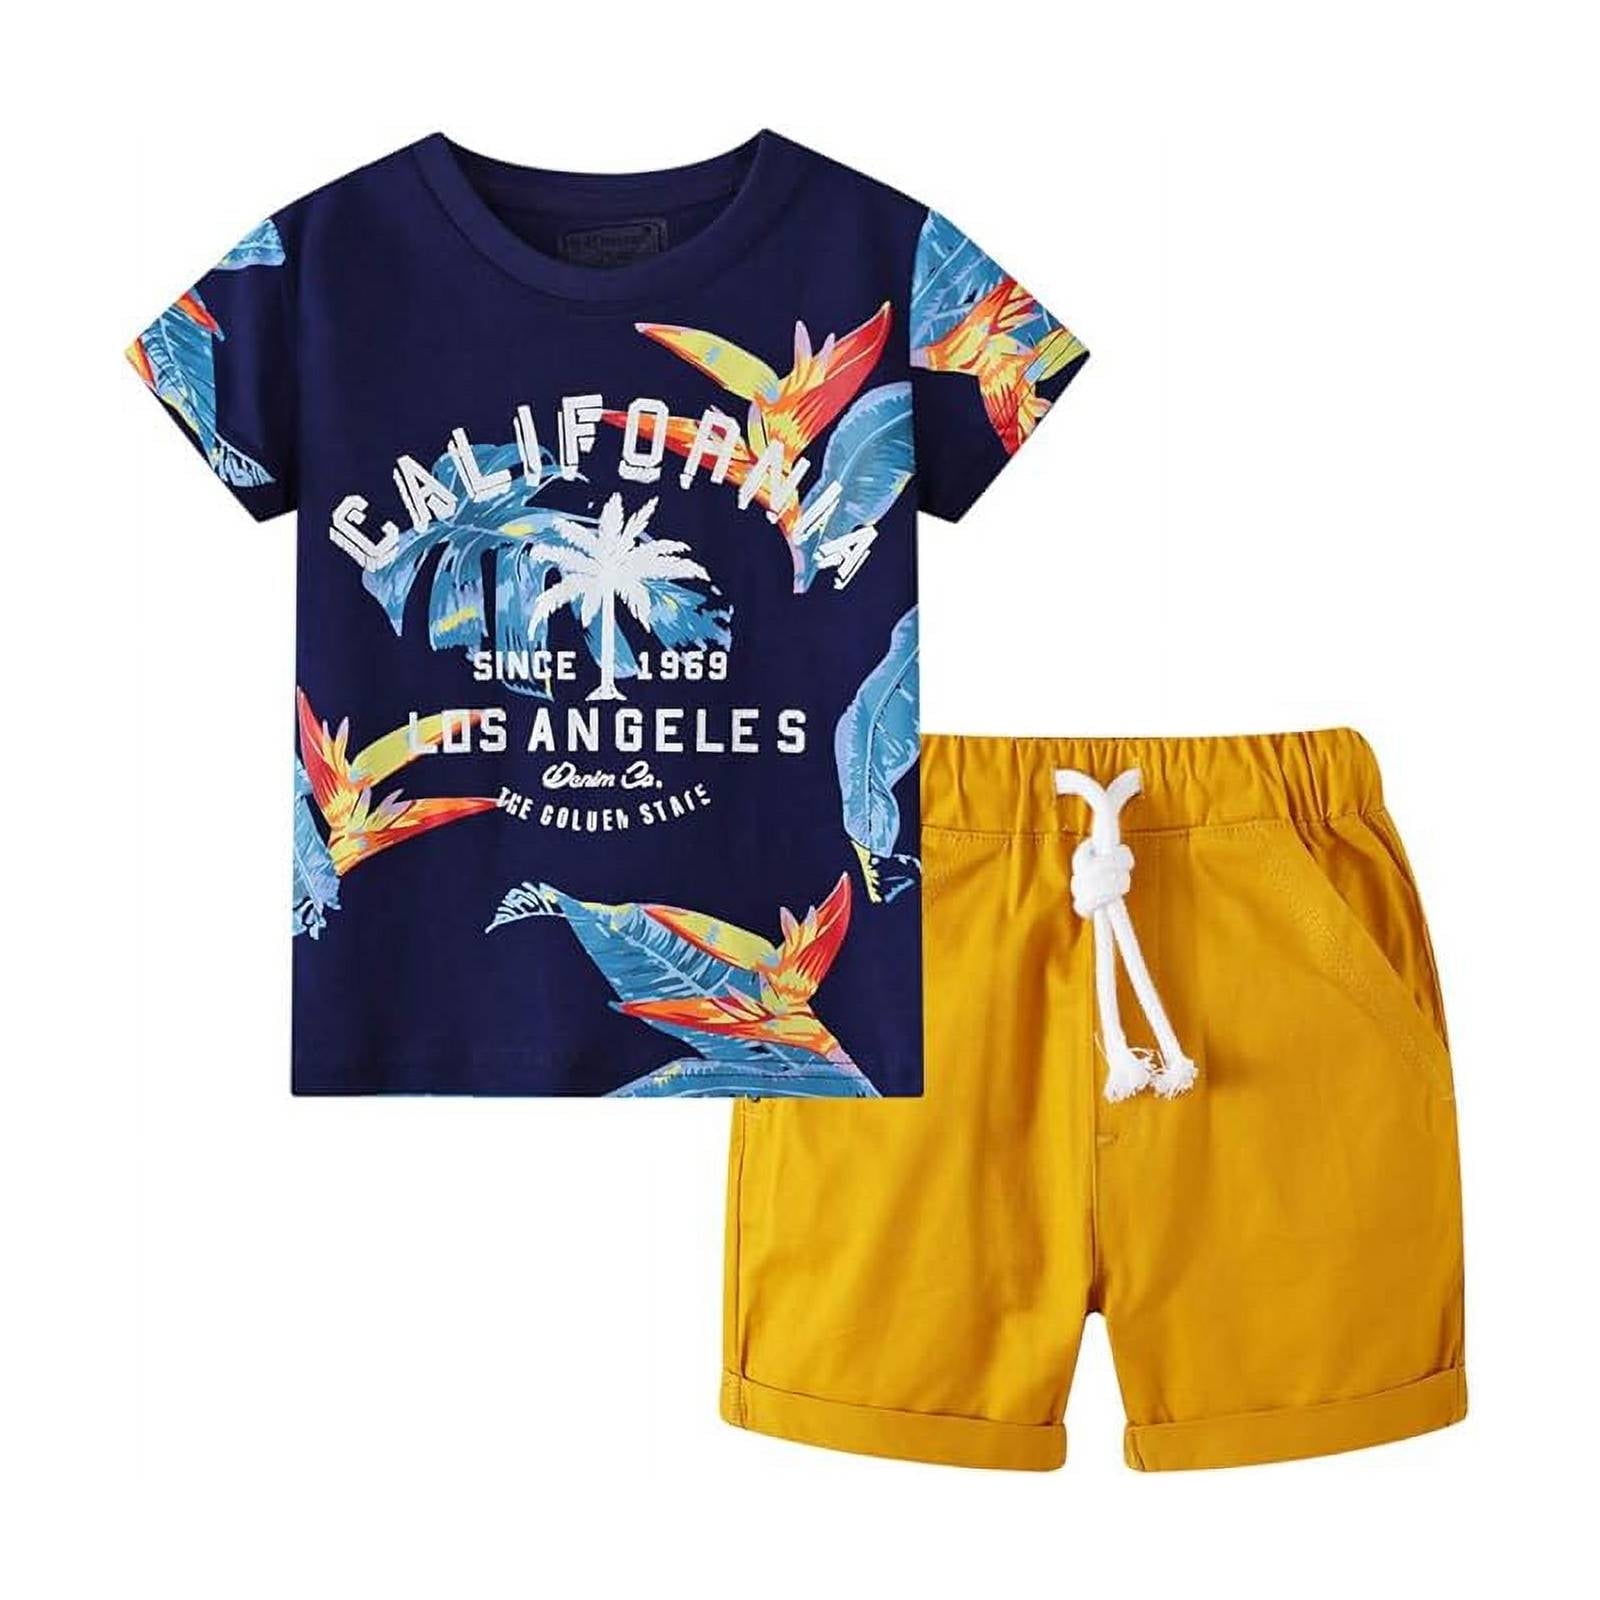 HILEELANG Toddler Boy Summer Short Sets Outfits Cotton CrewNeck Navy ...